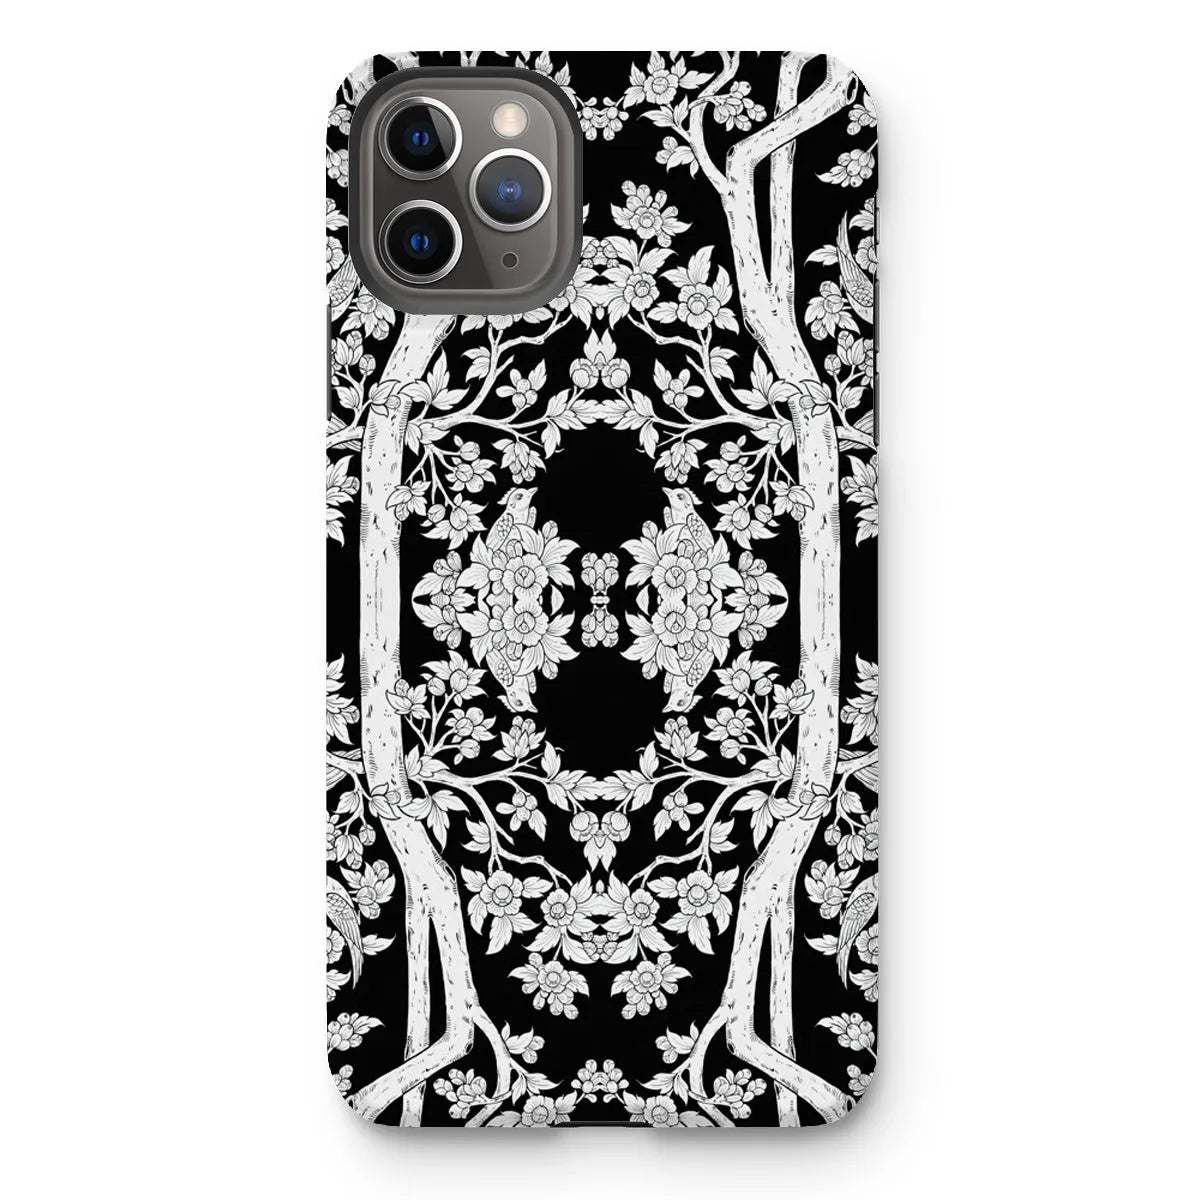 Aviary Black Aesthetic Pattern Art Phone Case - Iphone 11 Pro Max / Matte - Mobile Phone Cases - Aesthetic Art